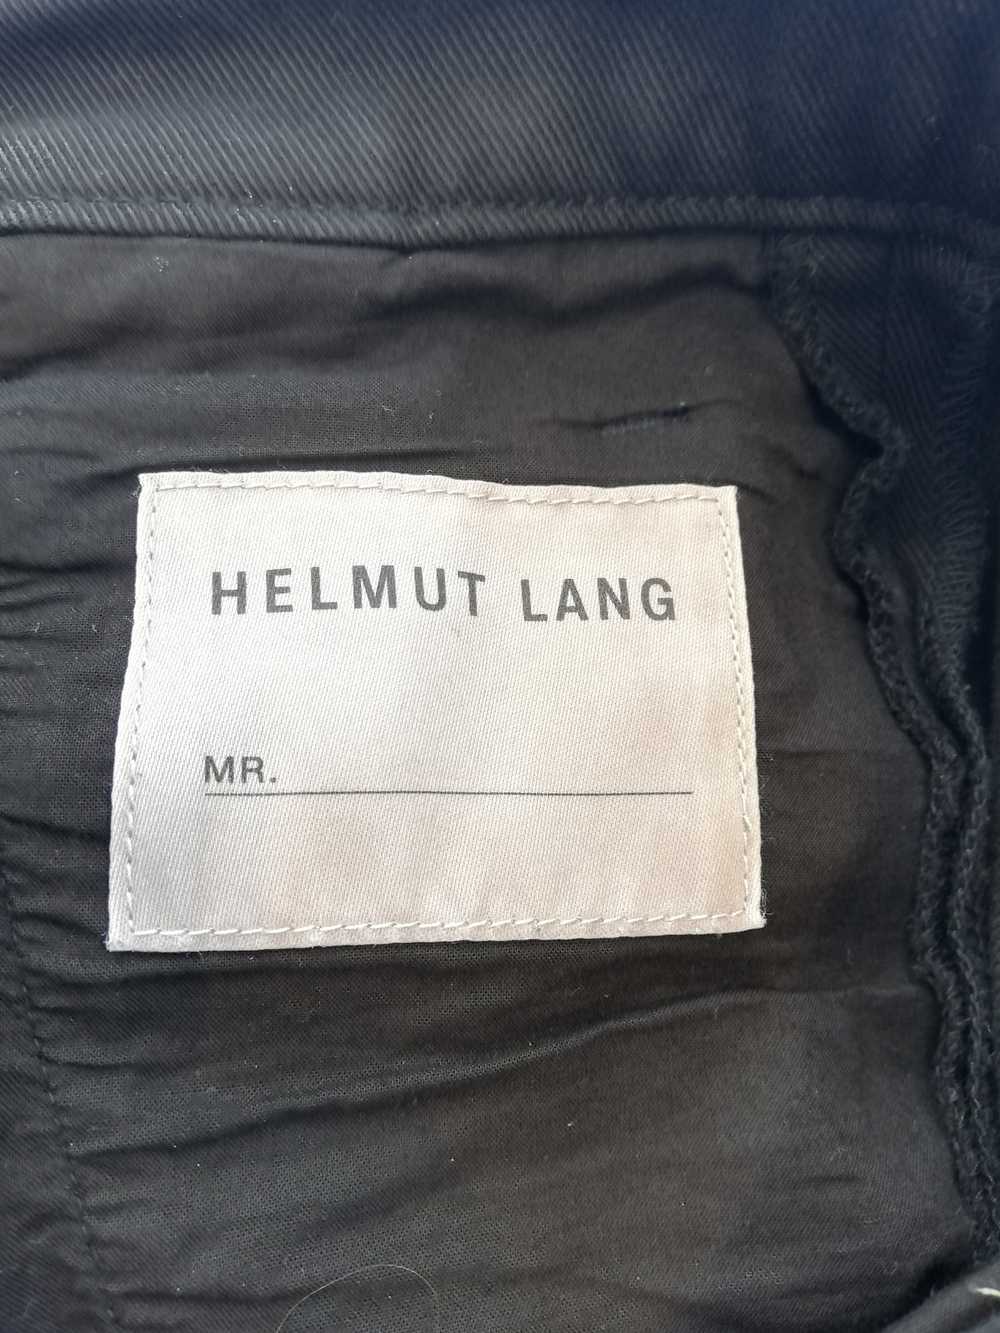 Helmut Lang Helmut Lang Cargo Pants Black Size S - image 6